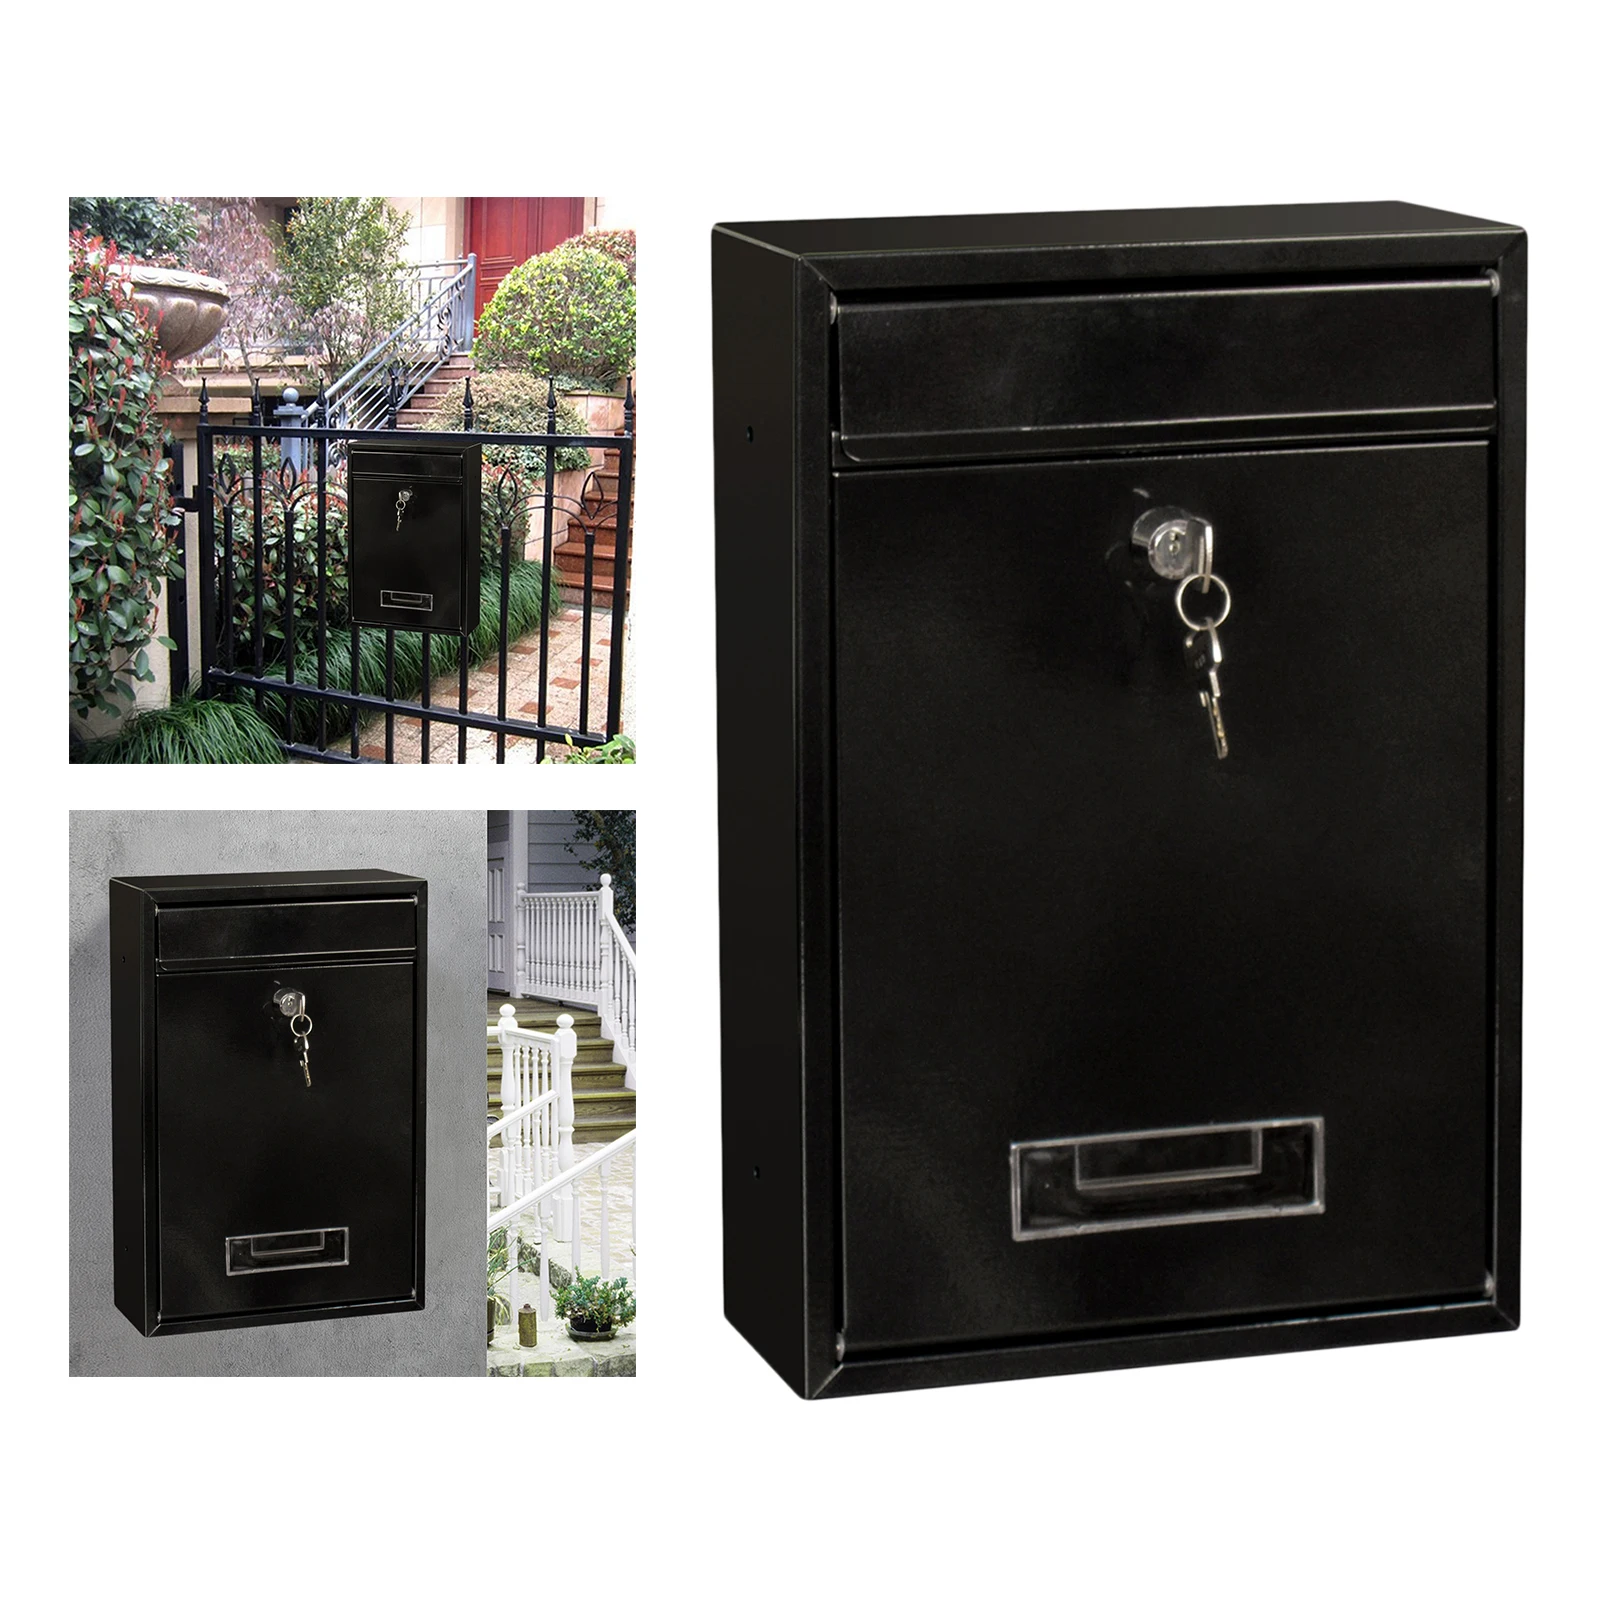 Metal Lock Wall Mounted Moisture Proof Mail Box Rainproof Mail Box Lockable Mail Box 2 Keys